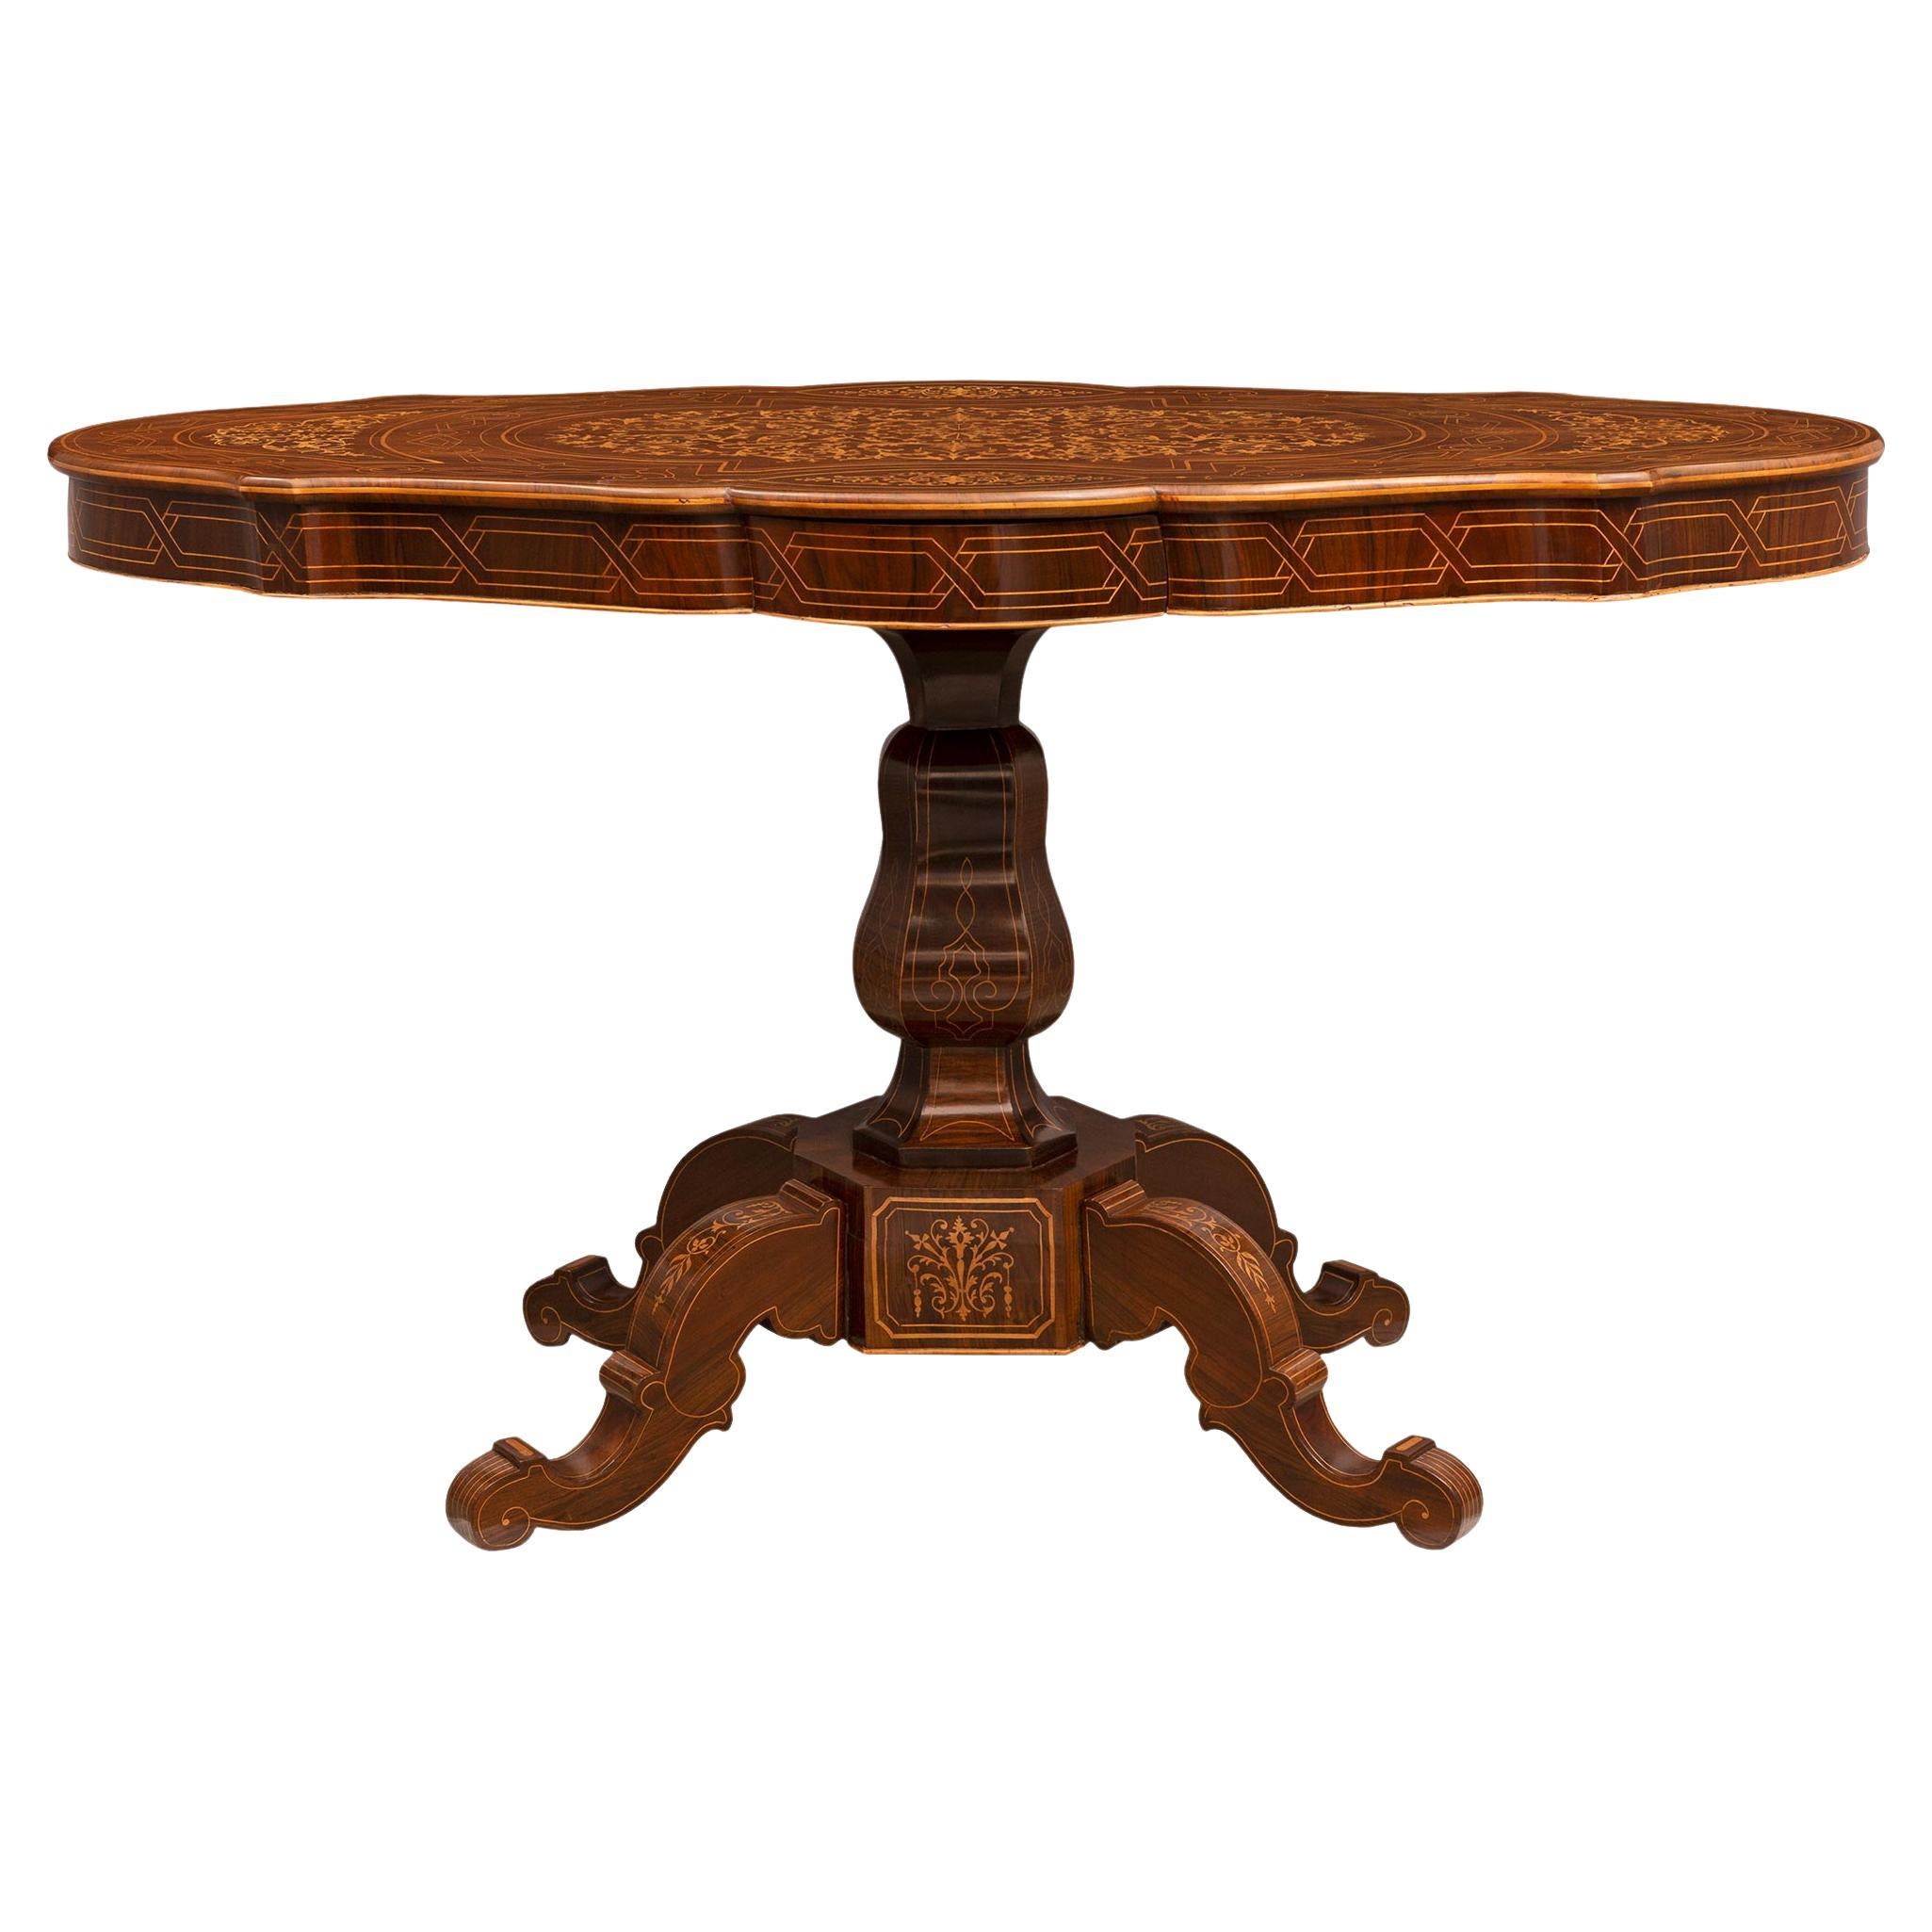 Italian 19th Century Charles X Period Walnut and Maplewood Inlaid Table